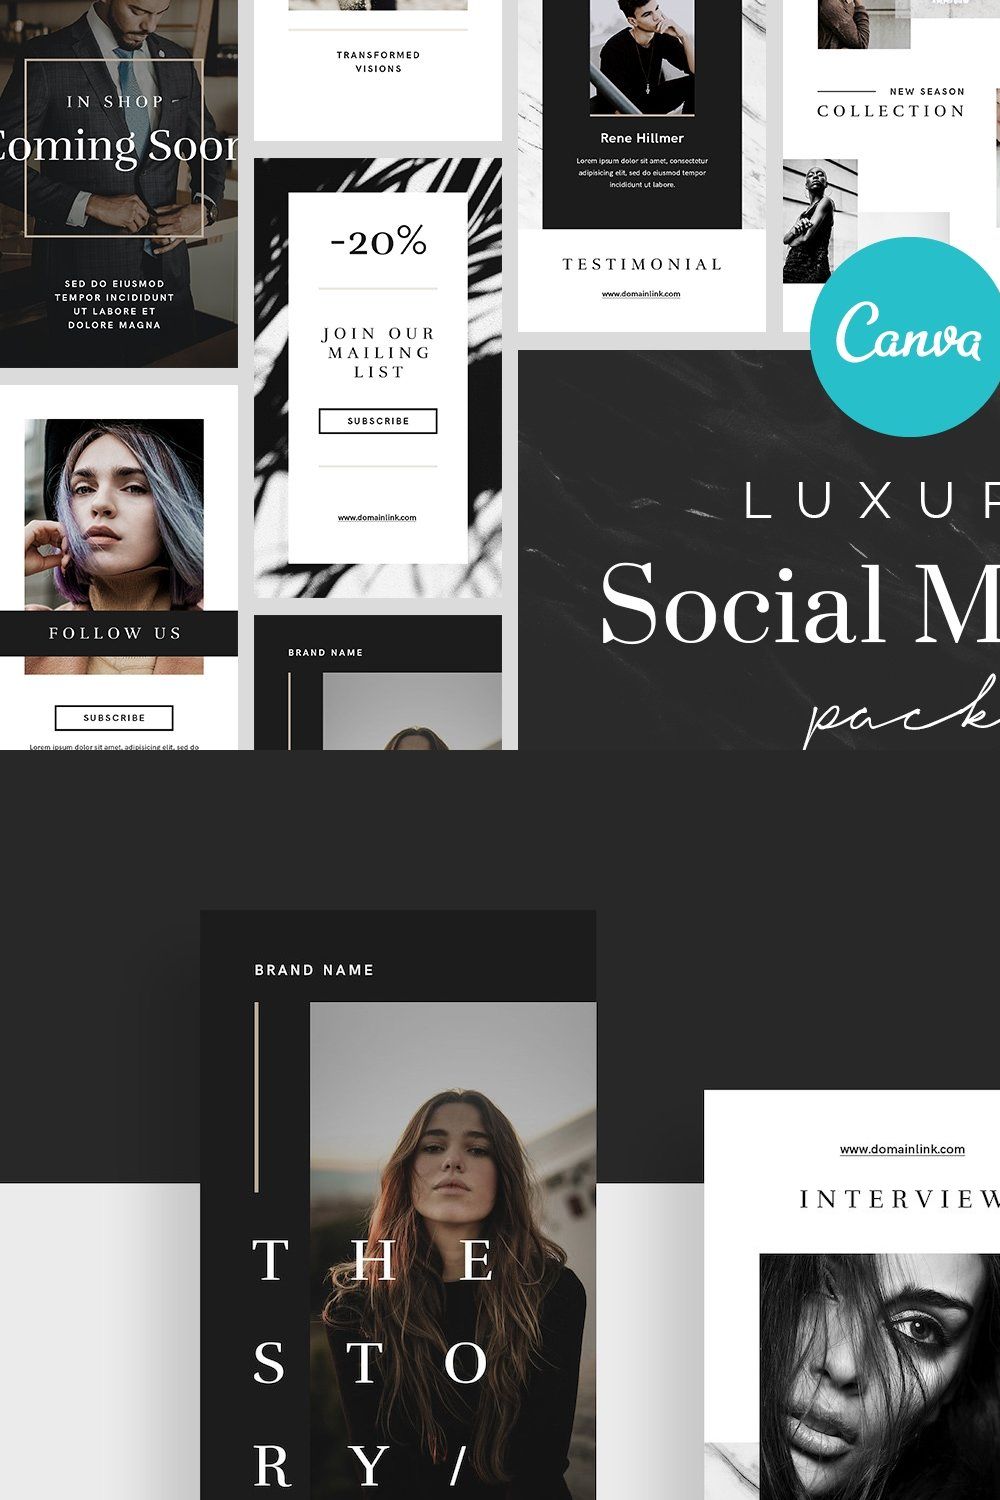 Canva Luxury Socia Media Instagram pinterest preview image.